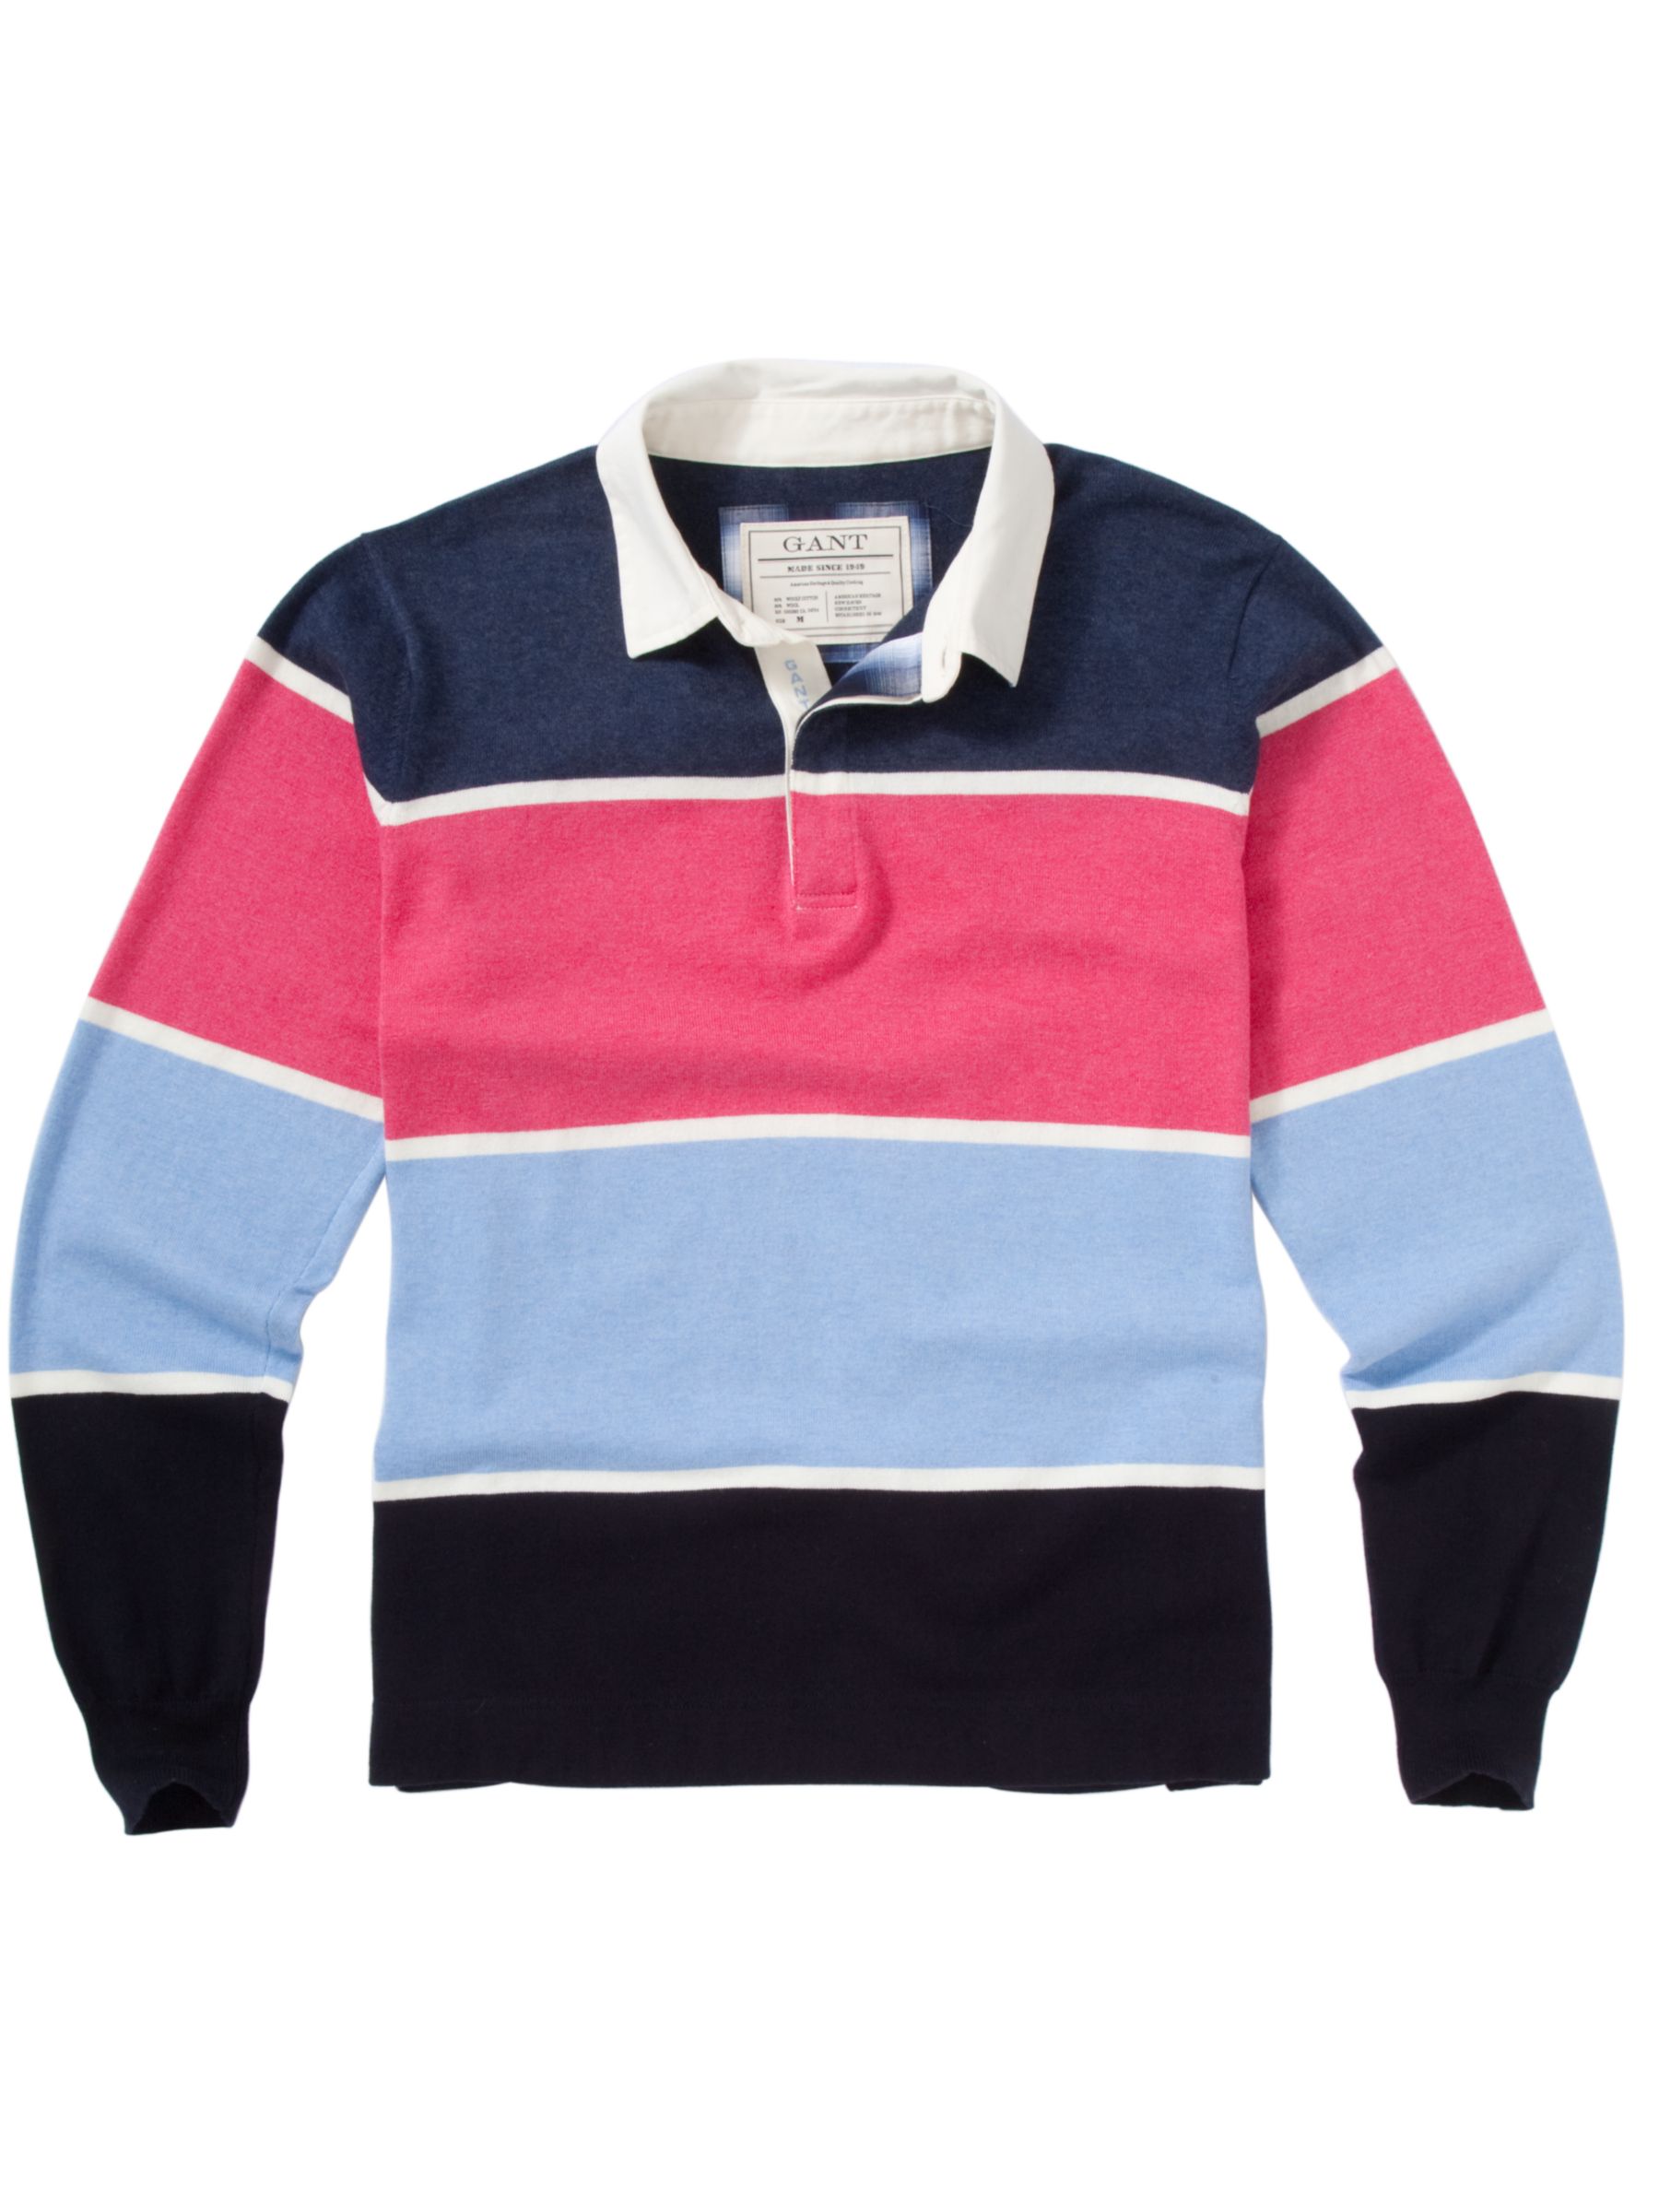 Cotton/Wool Block Stripe Rugby Shirt,